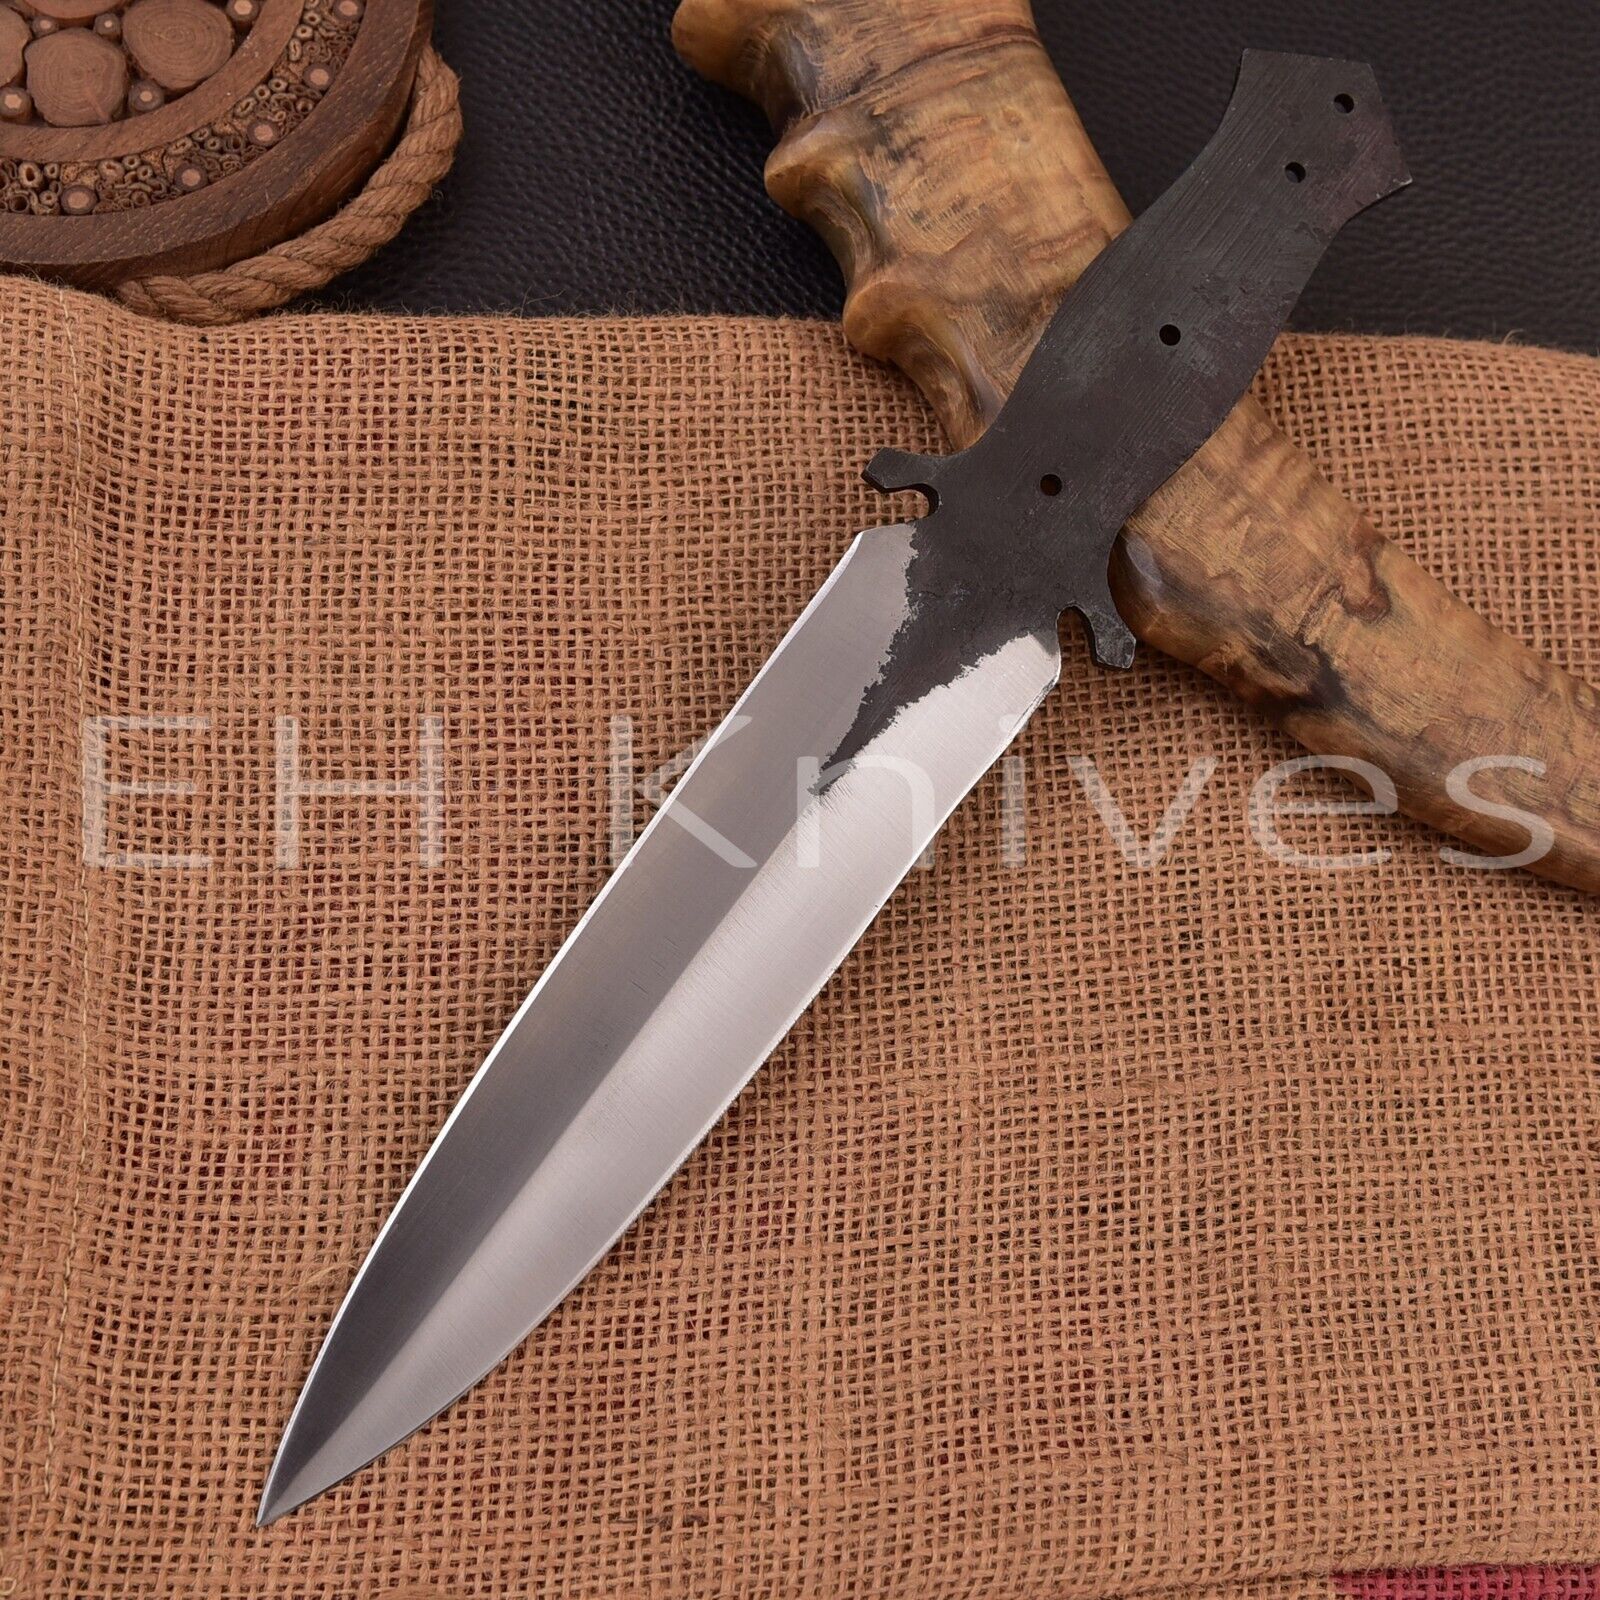 CUSTOM  FORGED Carbon Steel Blank Blade Skinner Knife Knife Making Supplies 3233